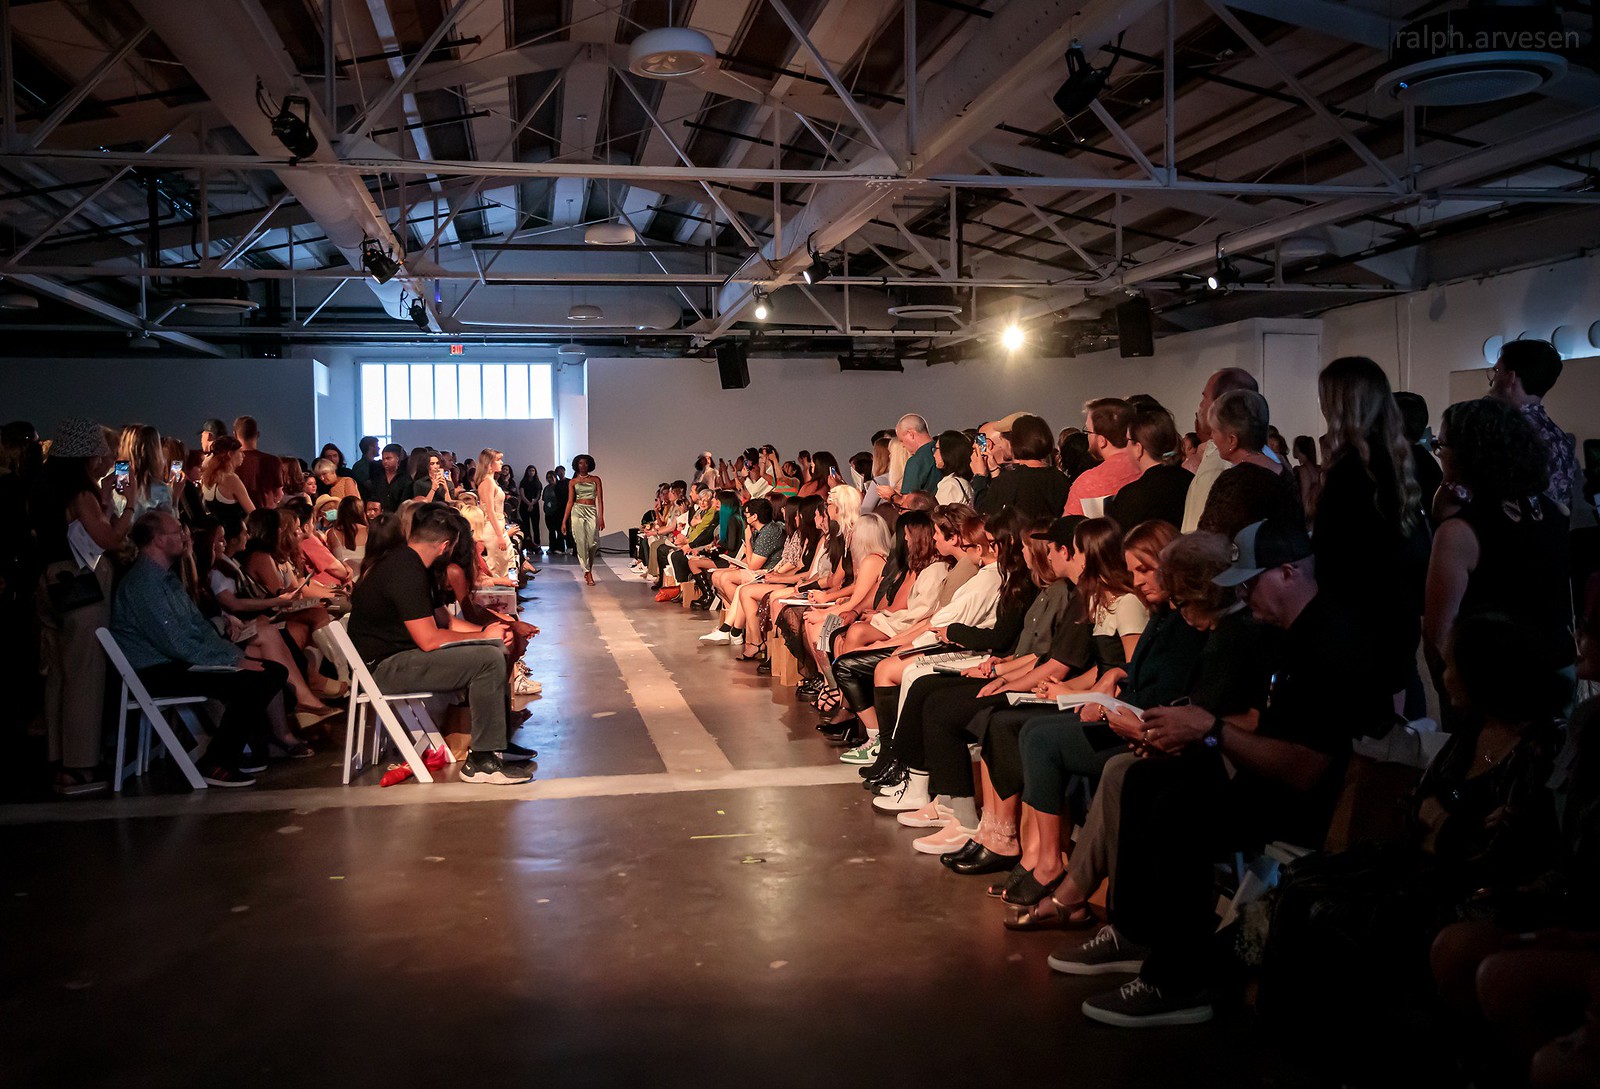 UT Fashion Show | Texas Review | Ralph Arvesen